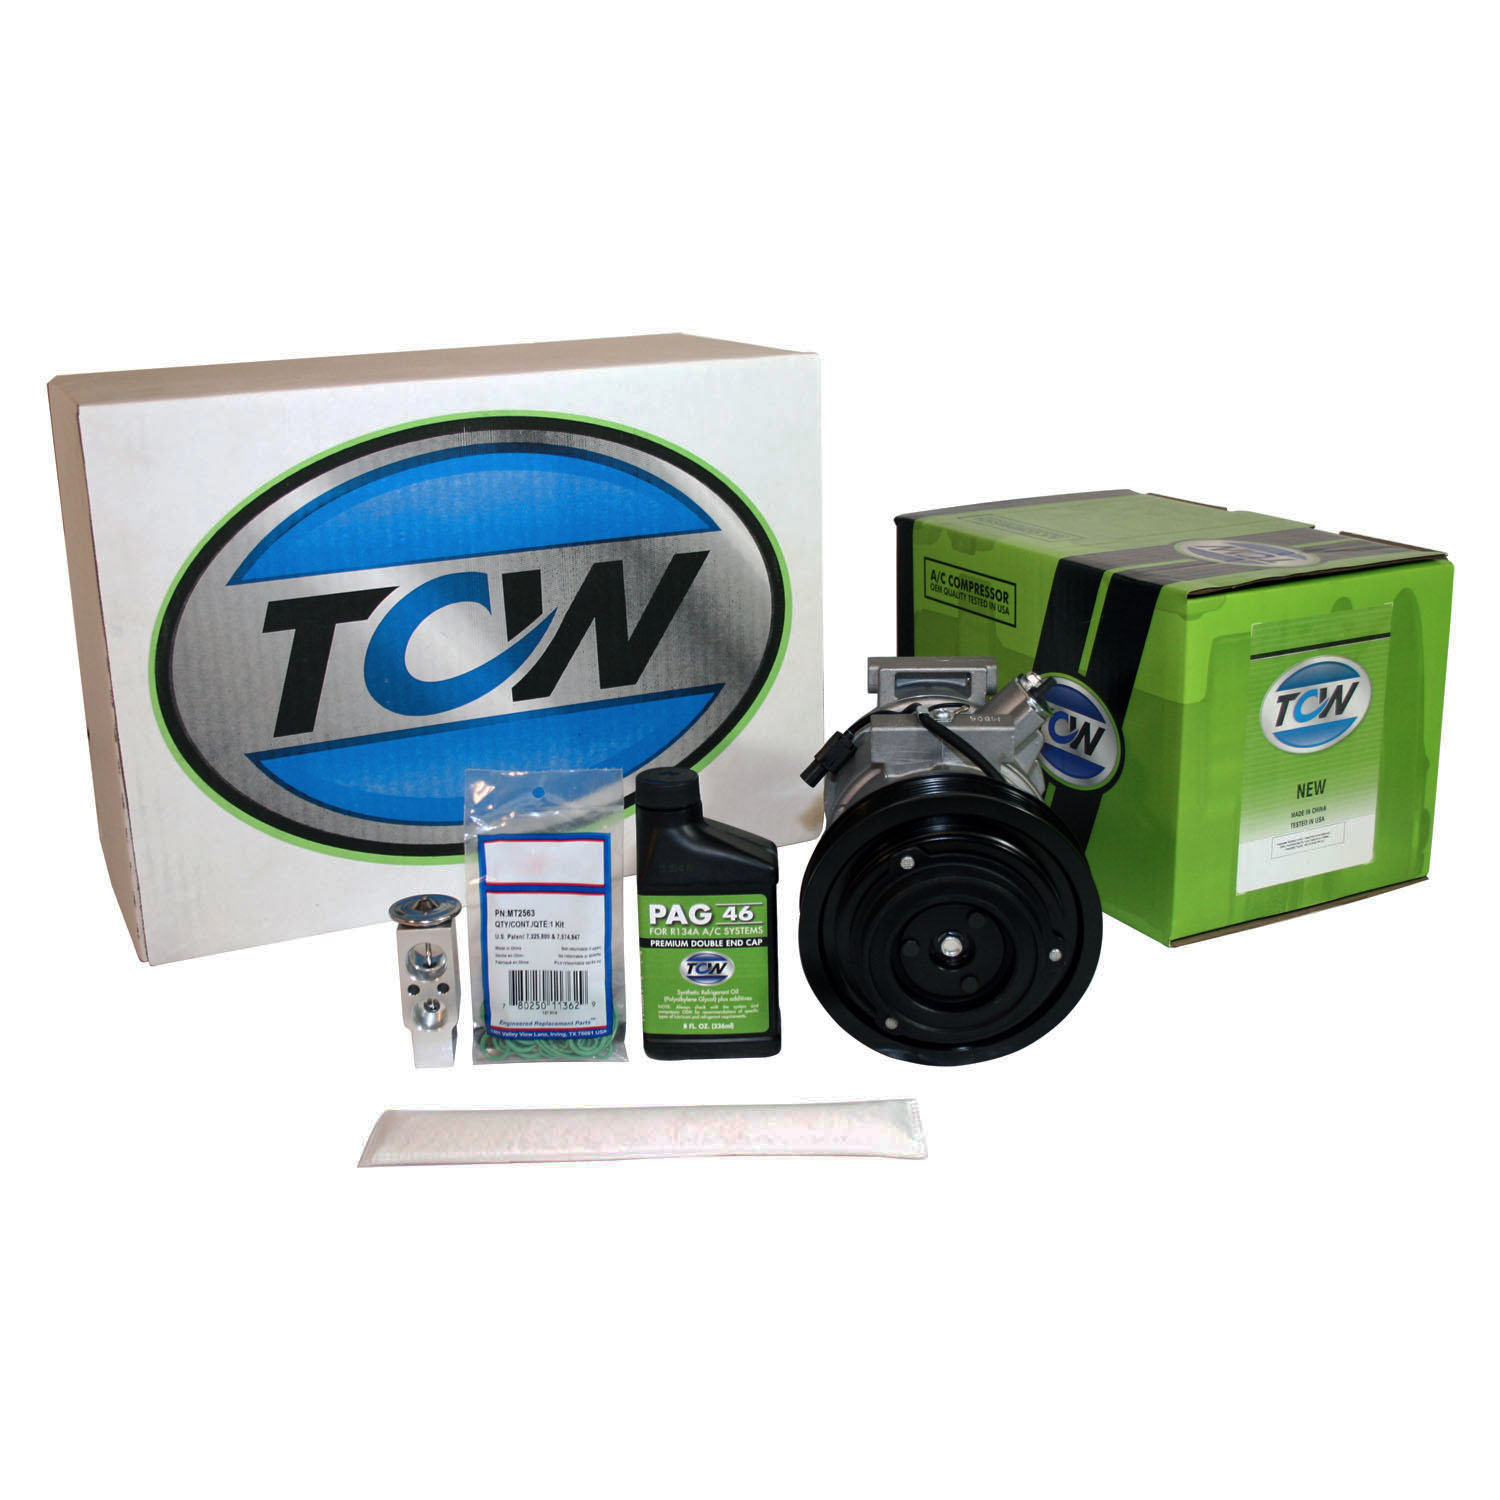 TCW Vehicle A/C Kit K1000398N New Product Image field_60b6a13a6e67c